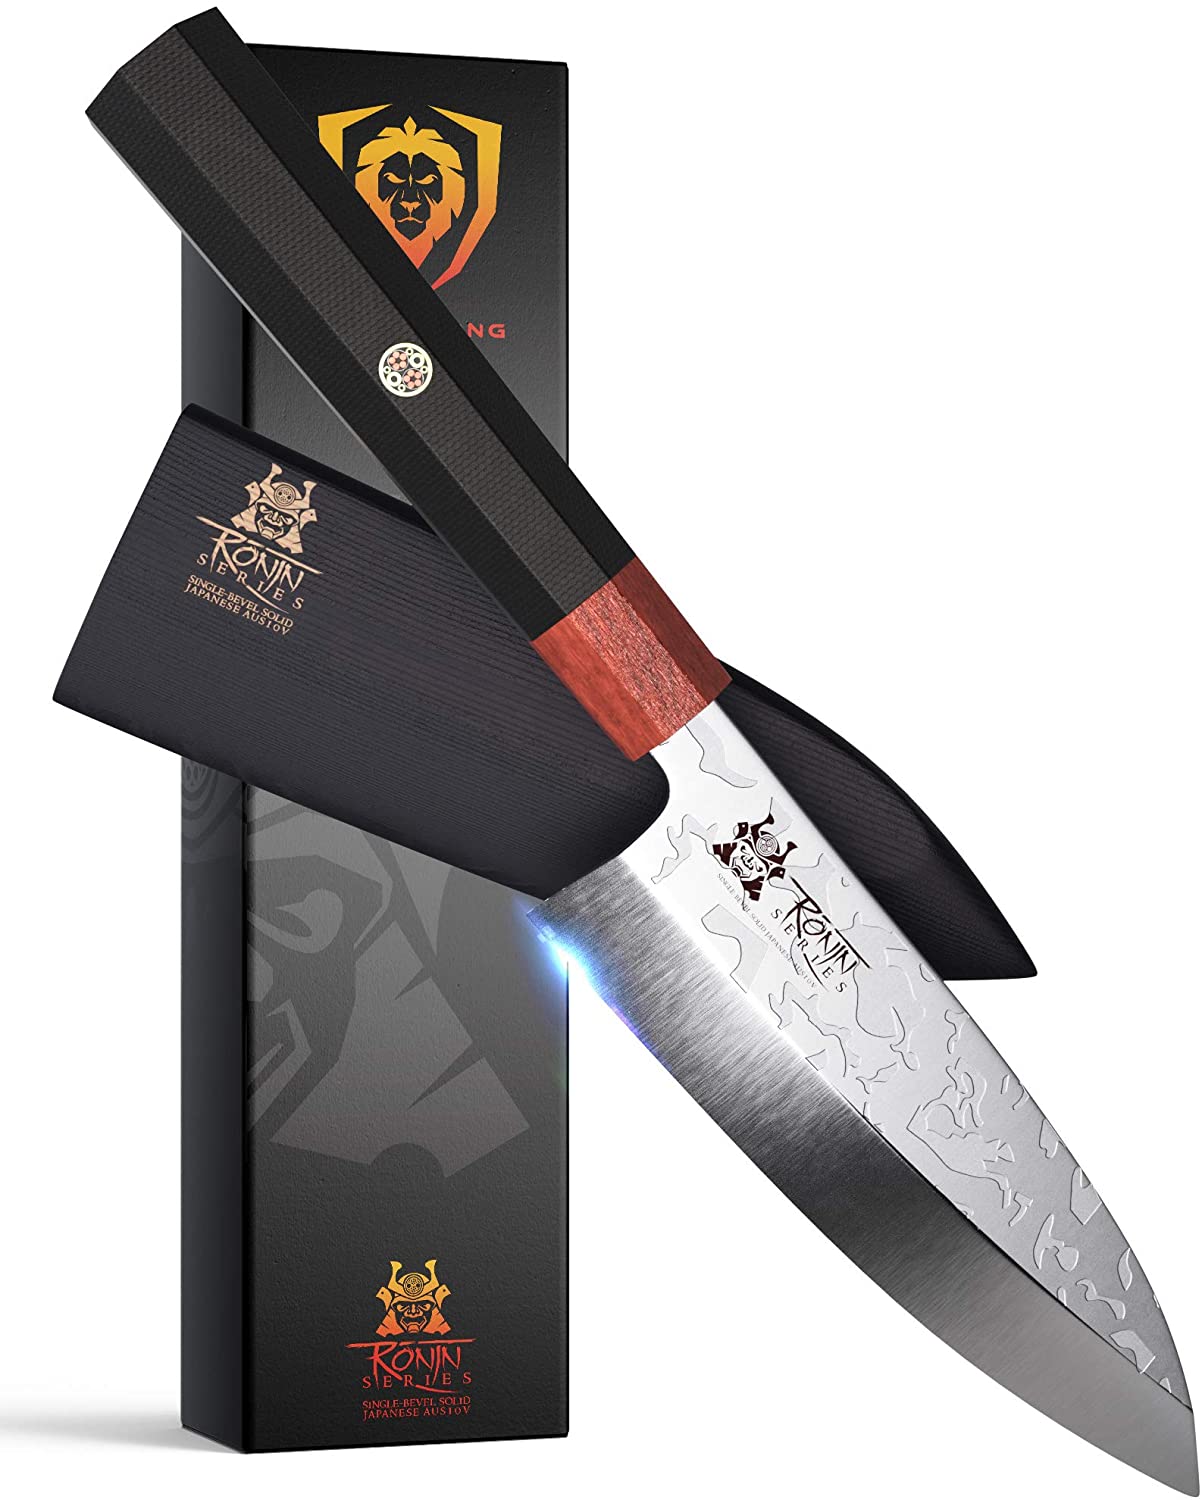 Dalstrong Chef Knife - 8 inch Blade - Shogun Series - Japanese AUS-10V Super Steel Kitchen Knife - Flame Orange Handle ABS - Damascus - Razor Sharp